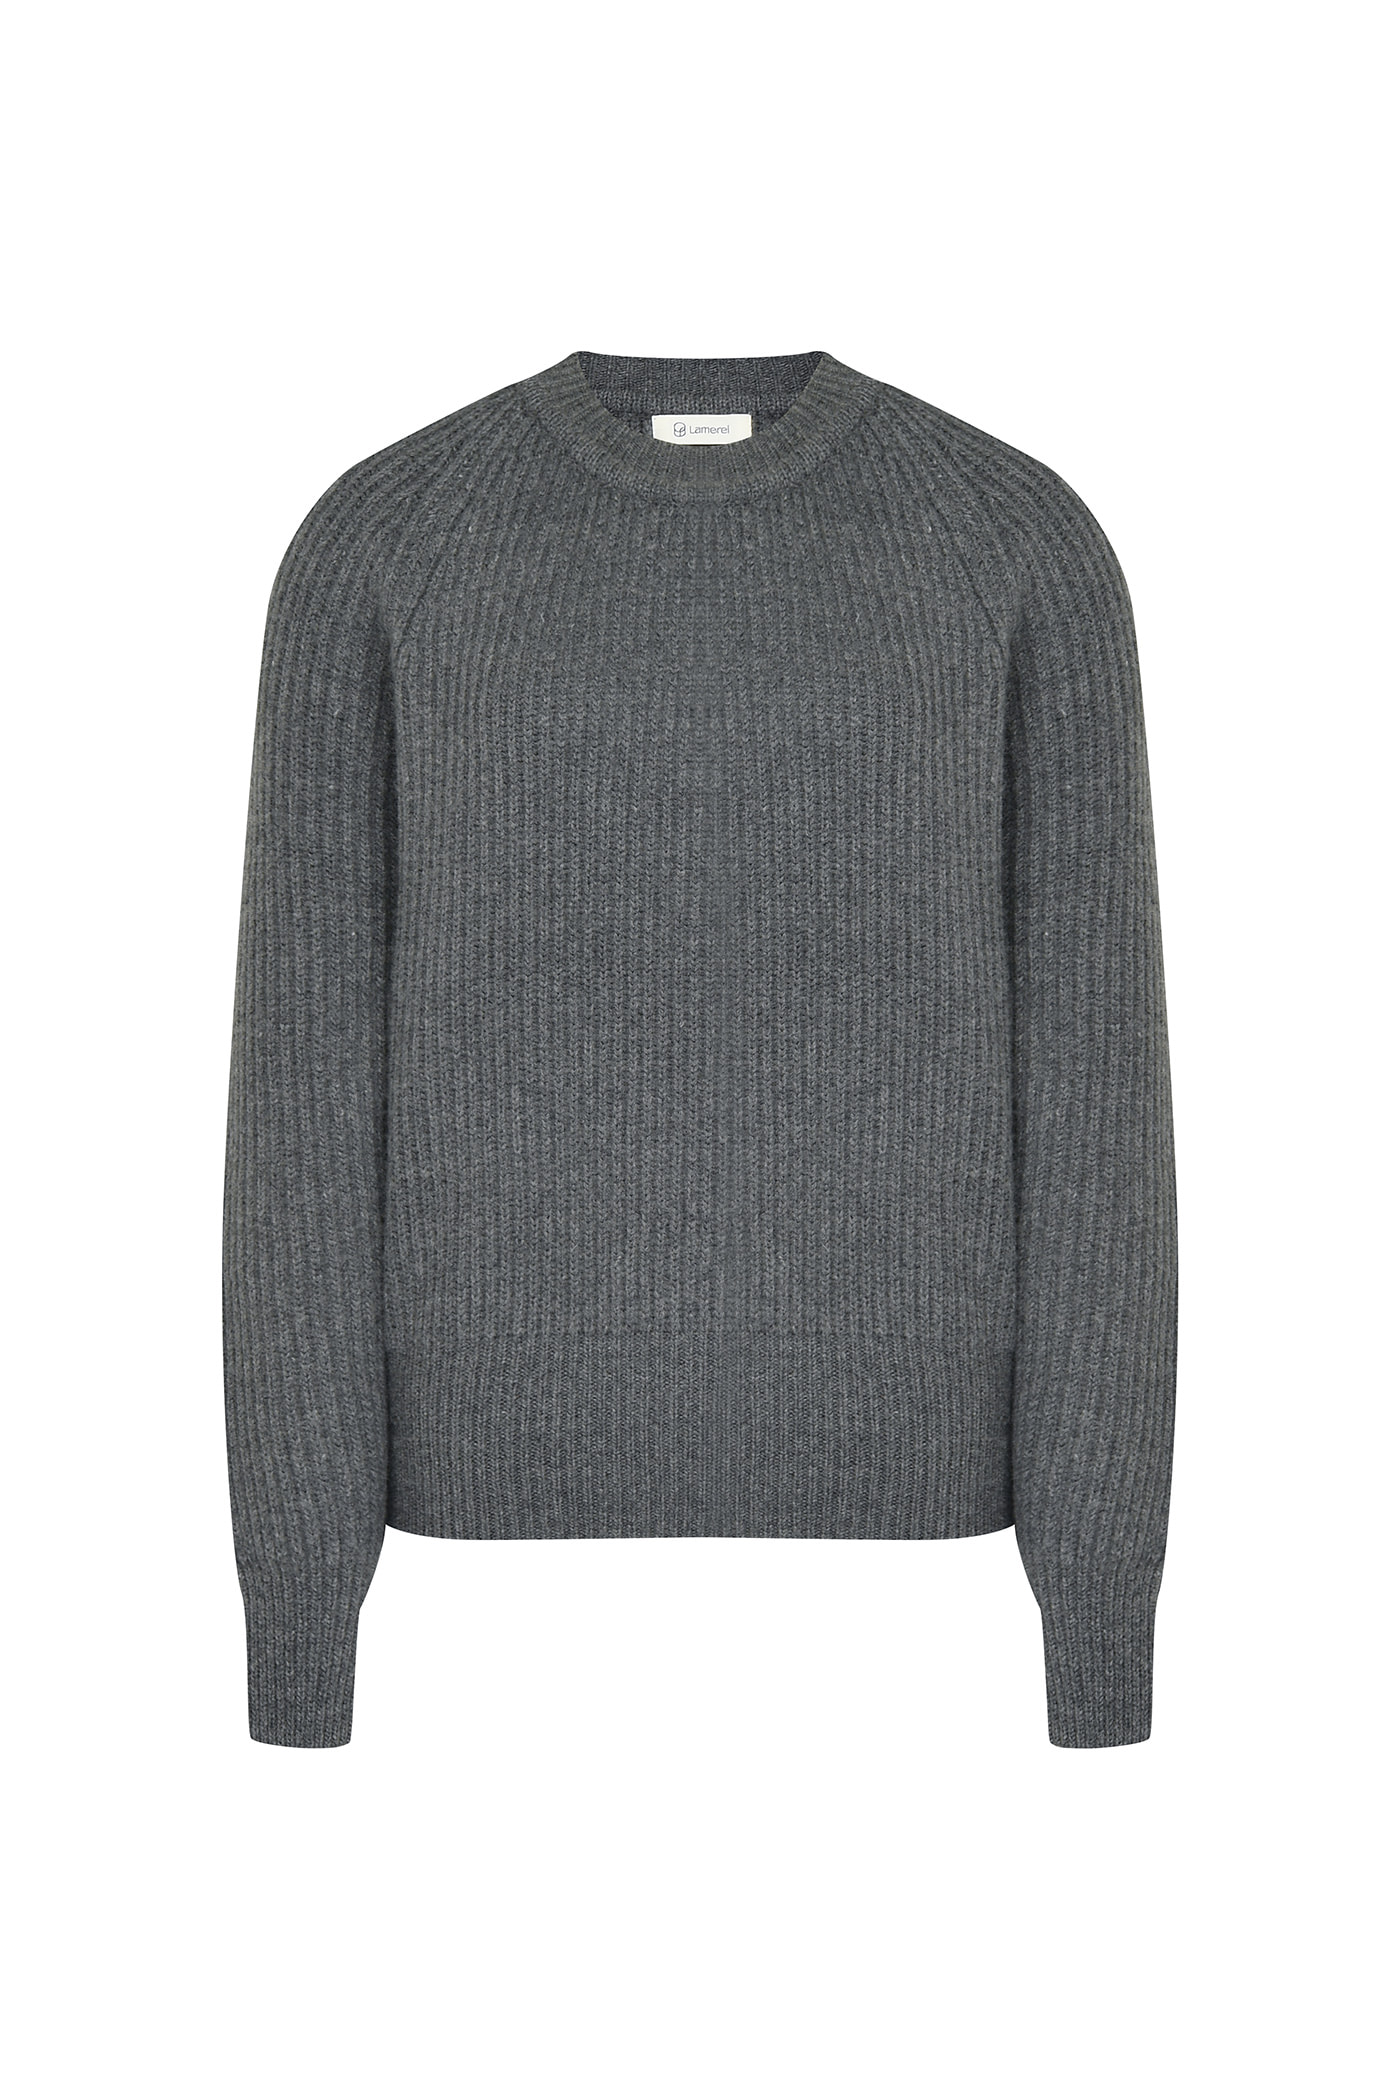 [SAMPLE]Wool Raglan Knit Top[LMBBWIKN145]-Gray